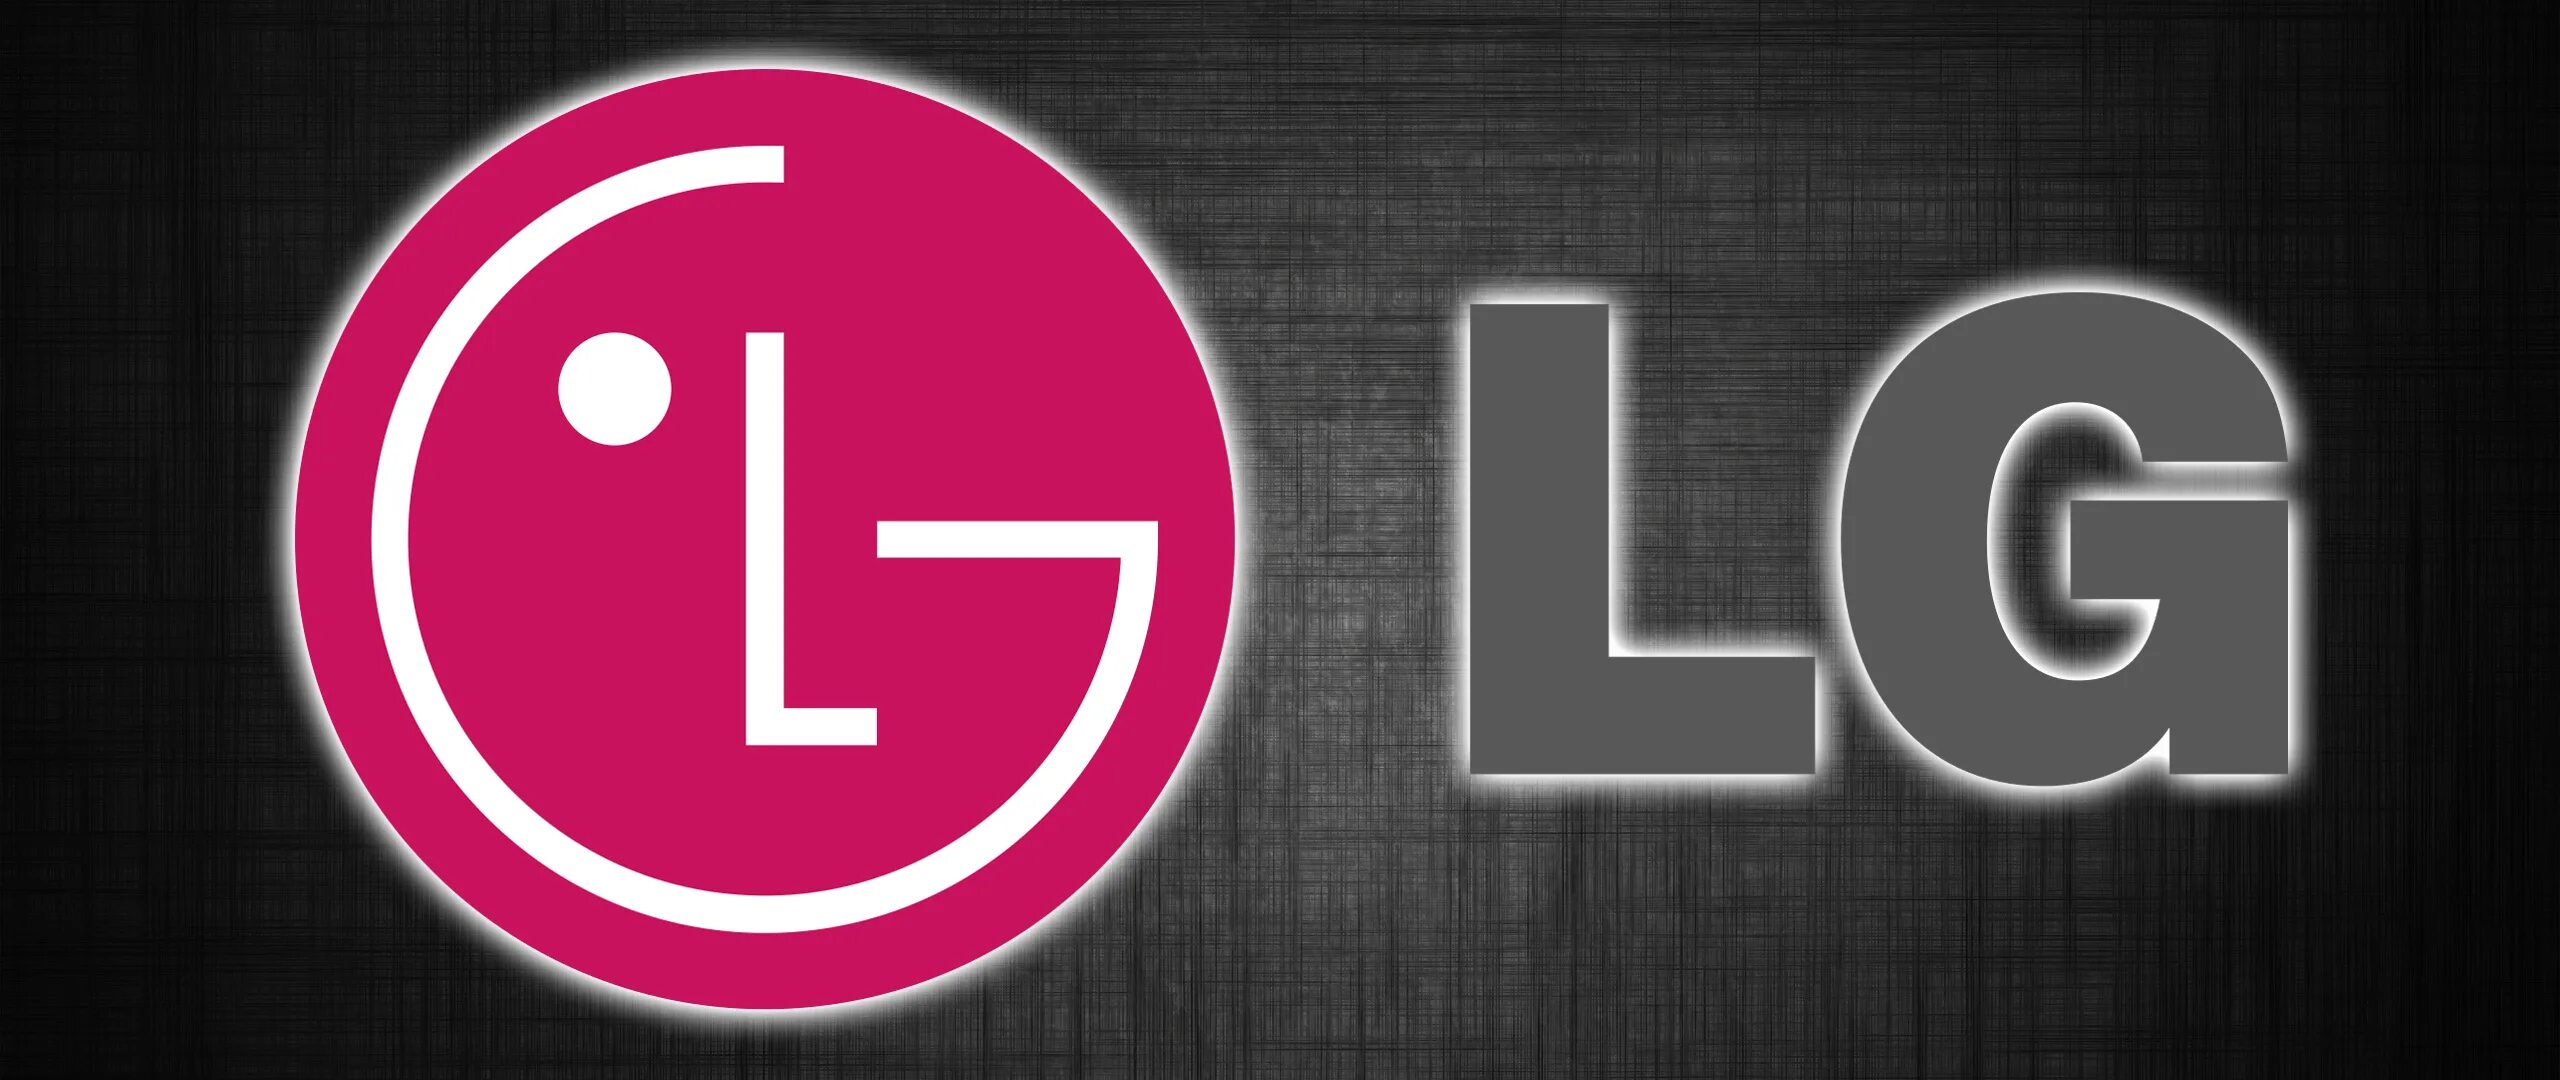 Lg телевизоры логотип. LG logo 2014. Первый логотип LG. ТВ В LG логотип. Красивый логотип LG.